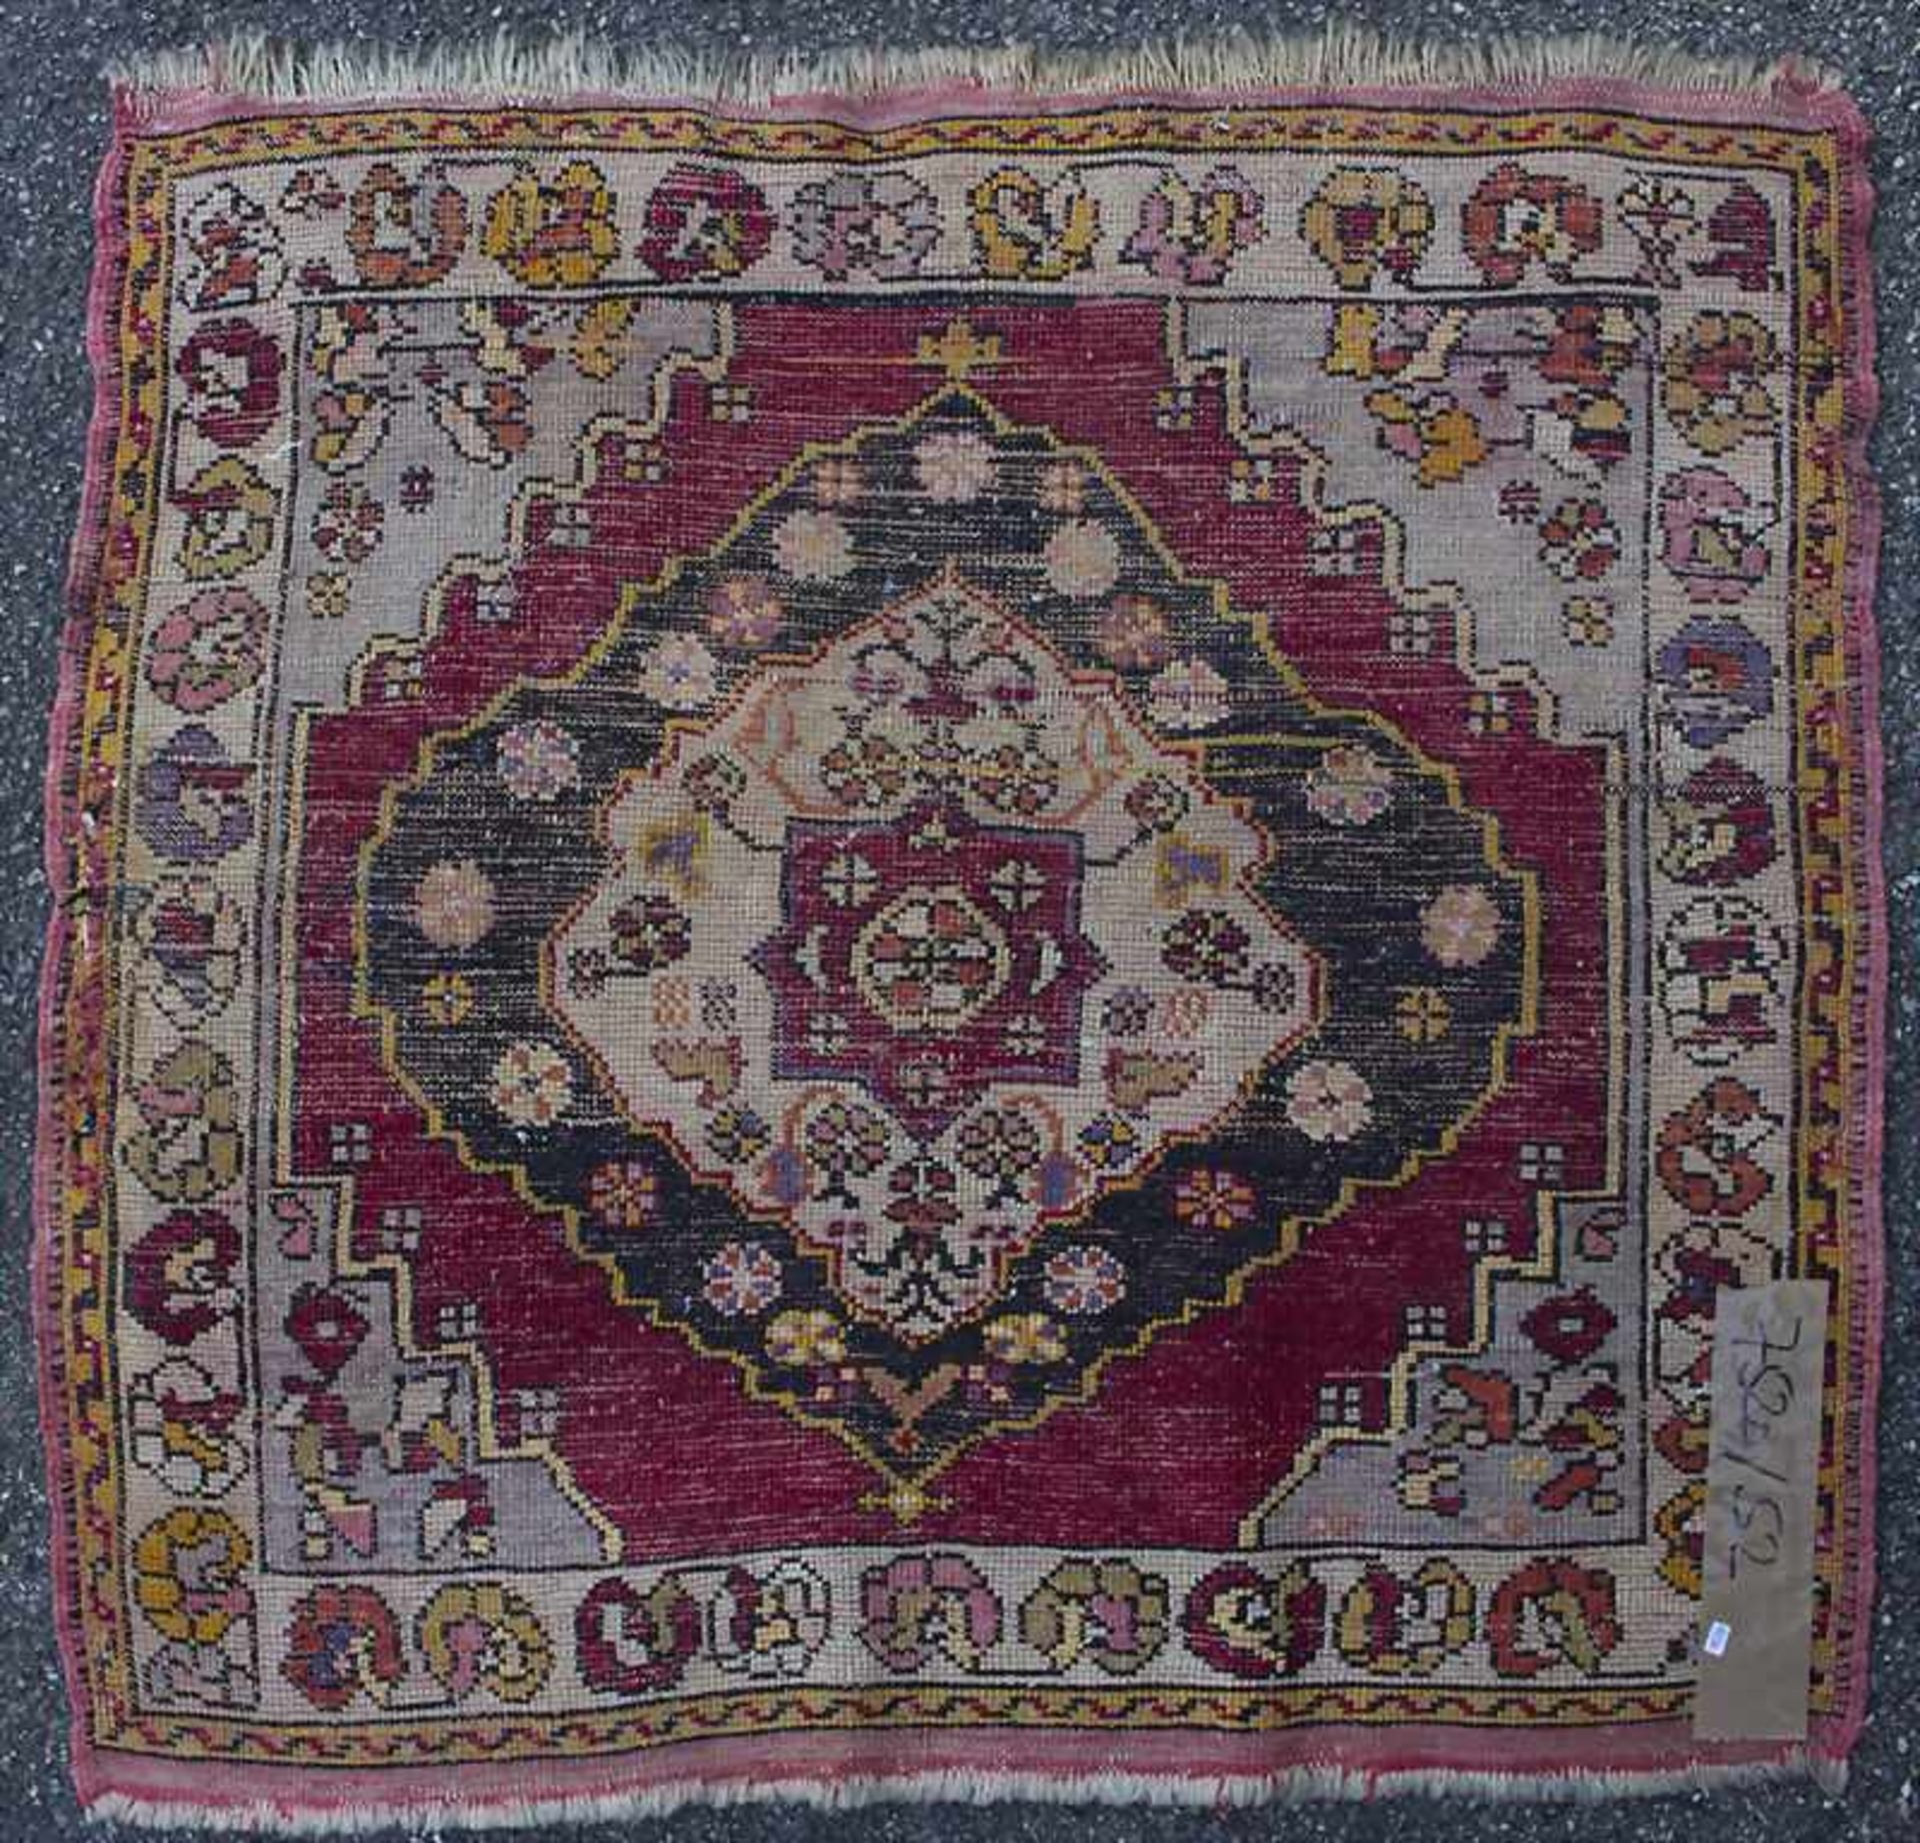 Kaukasischer Teppich / A caucasian carpetMaterial: Wolle auf Wolle, Maße: 80 x 78 cm, Zustand: gut - Image 4 of 7